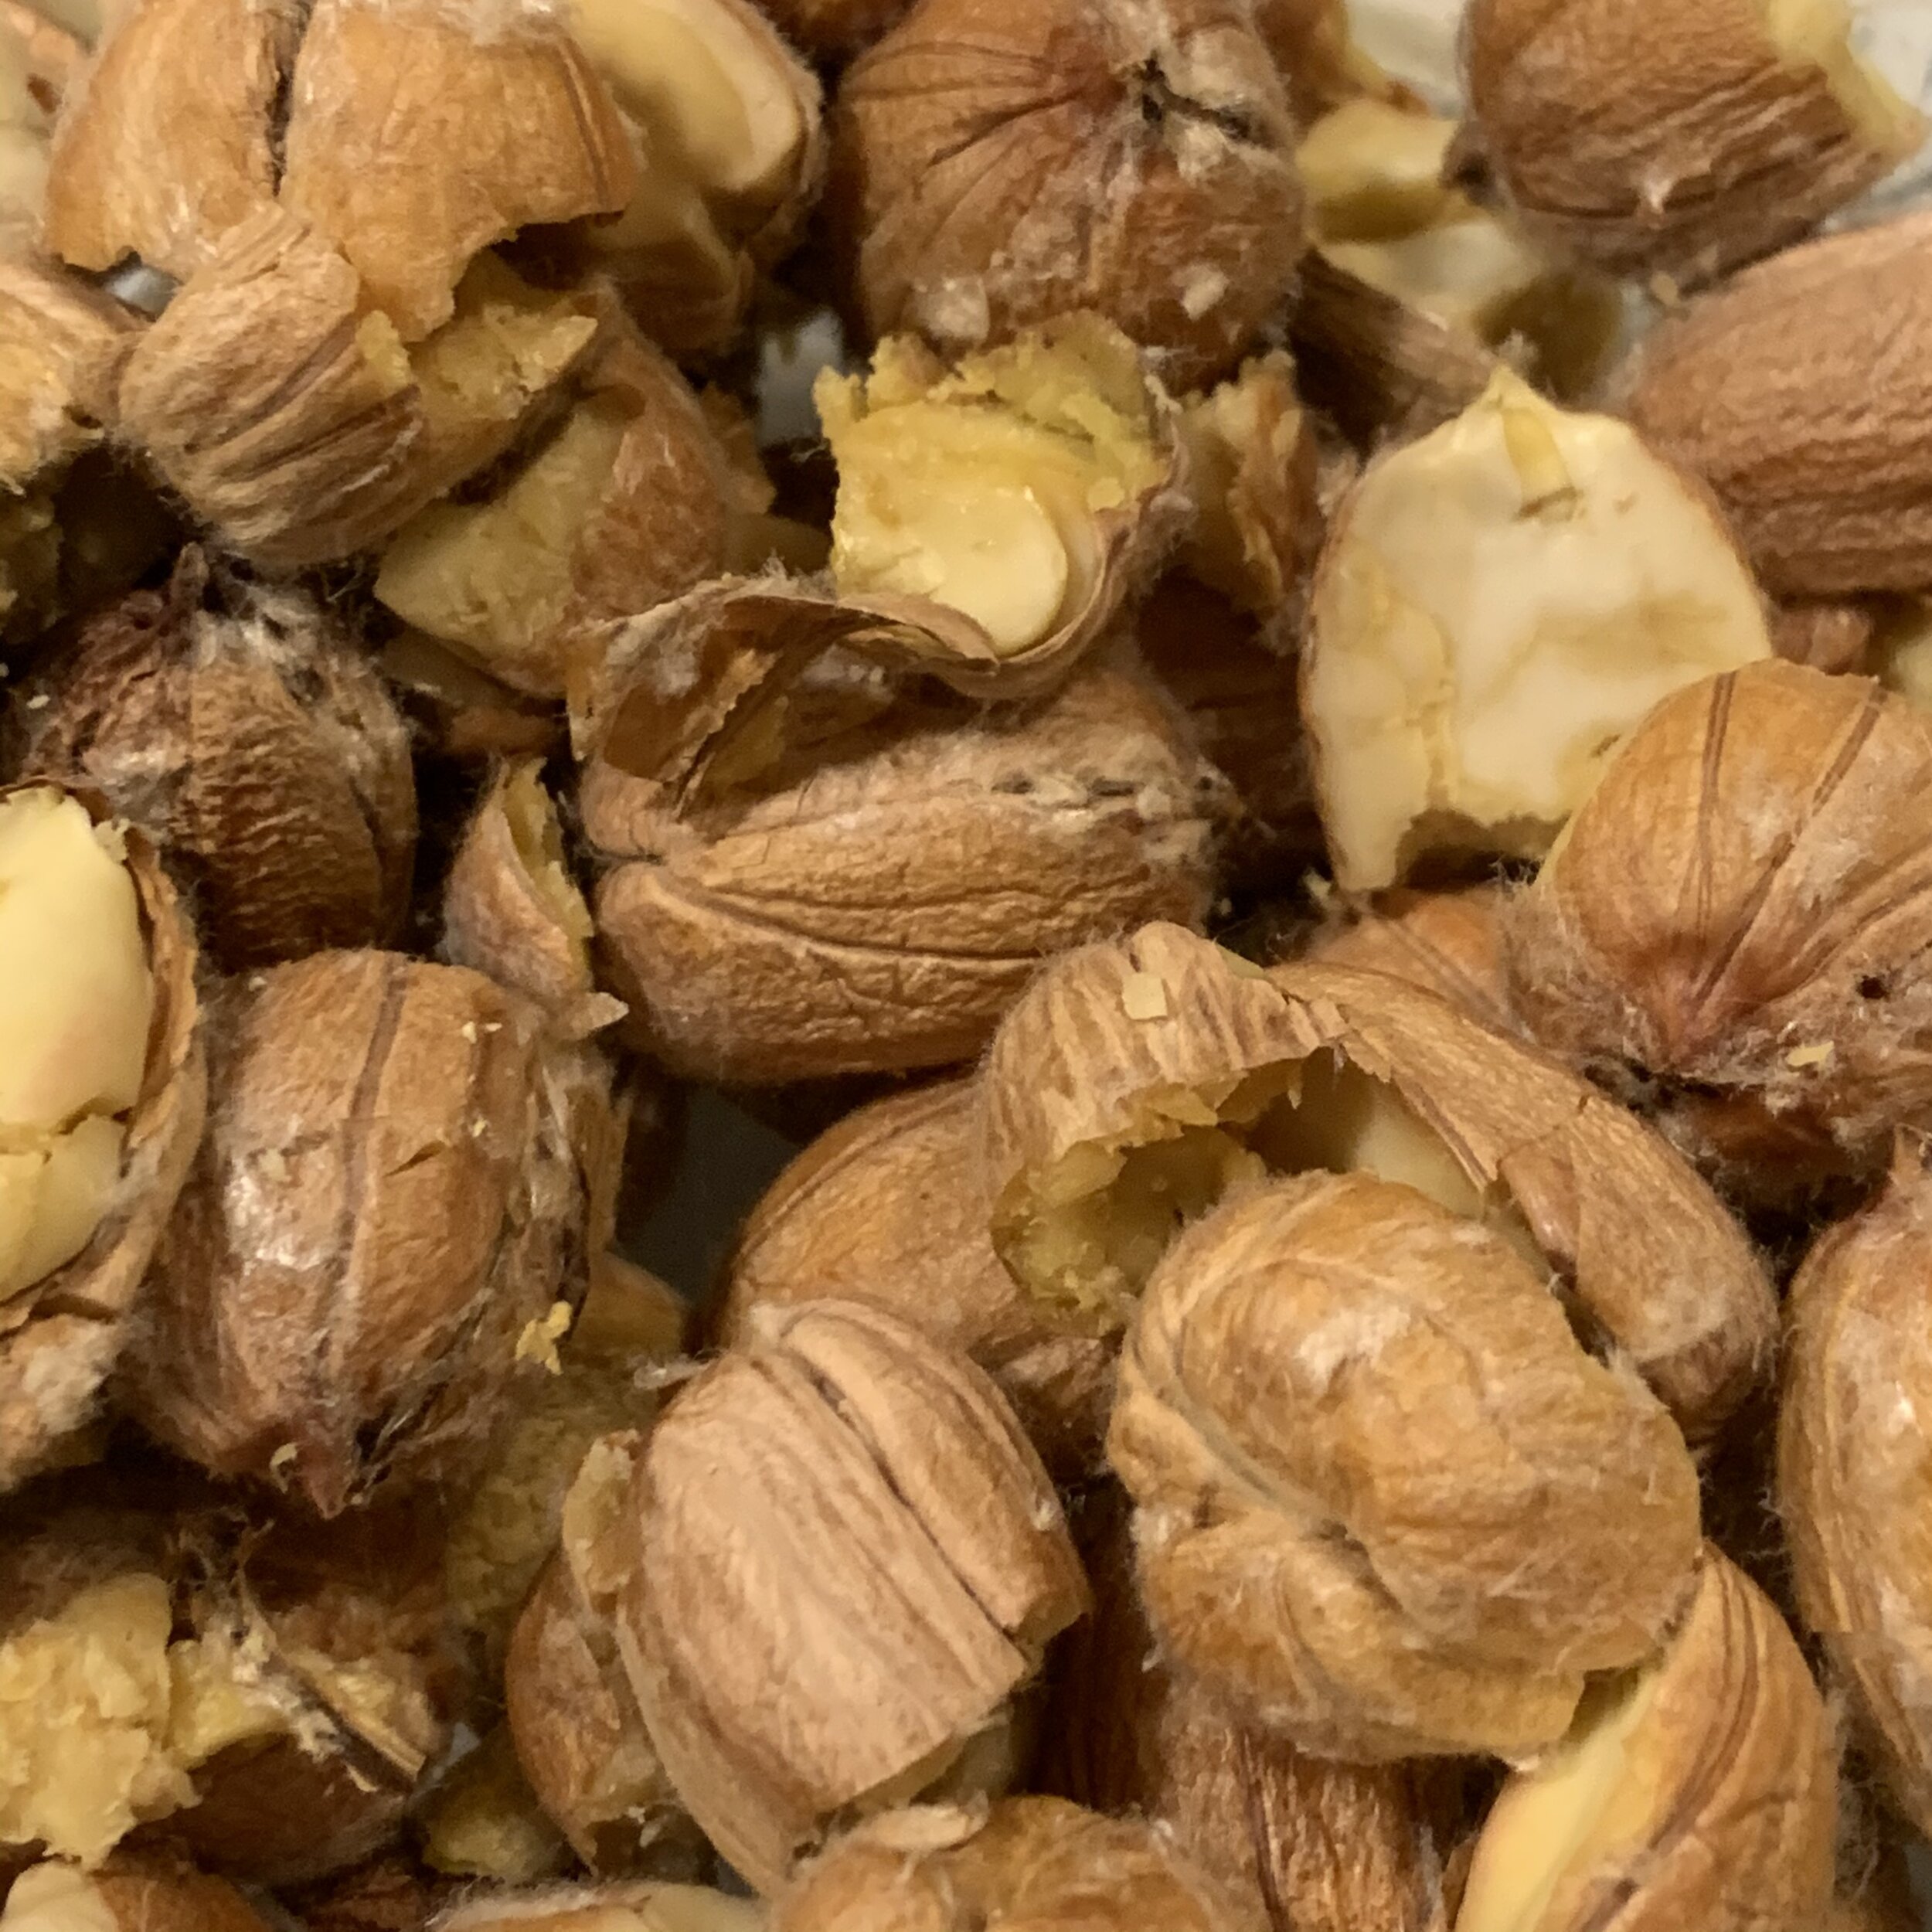 fresh kernels are moist, easier to process